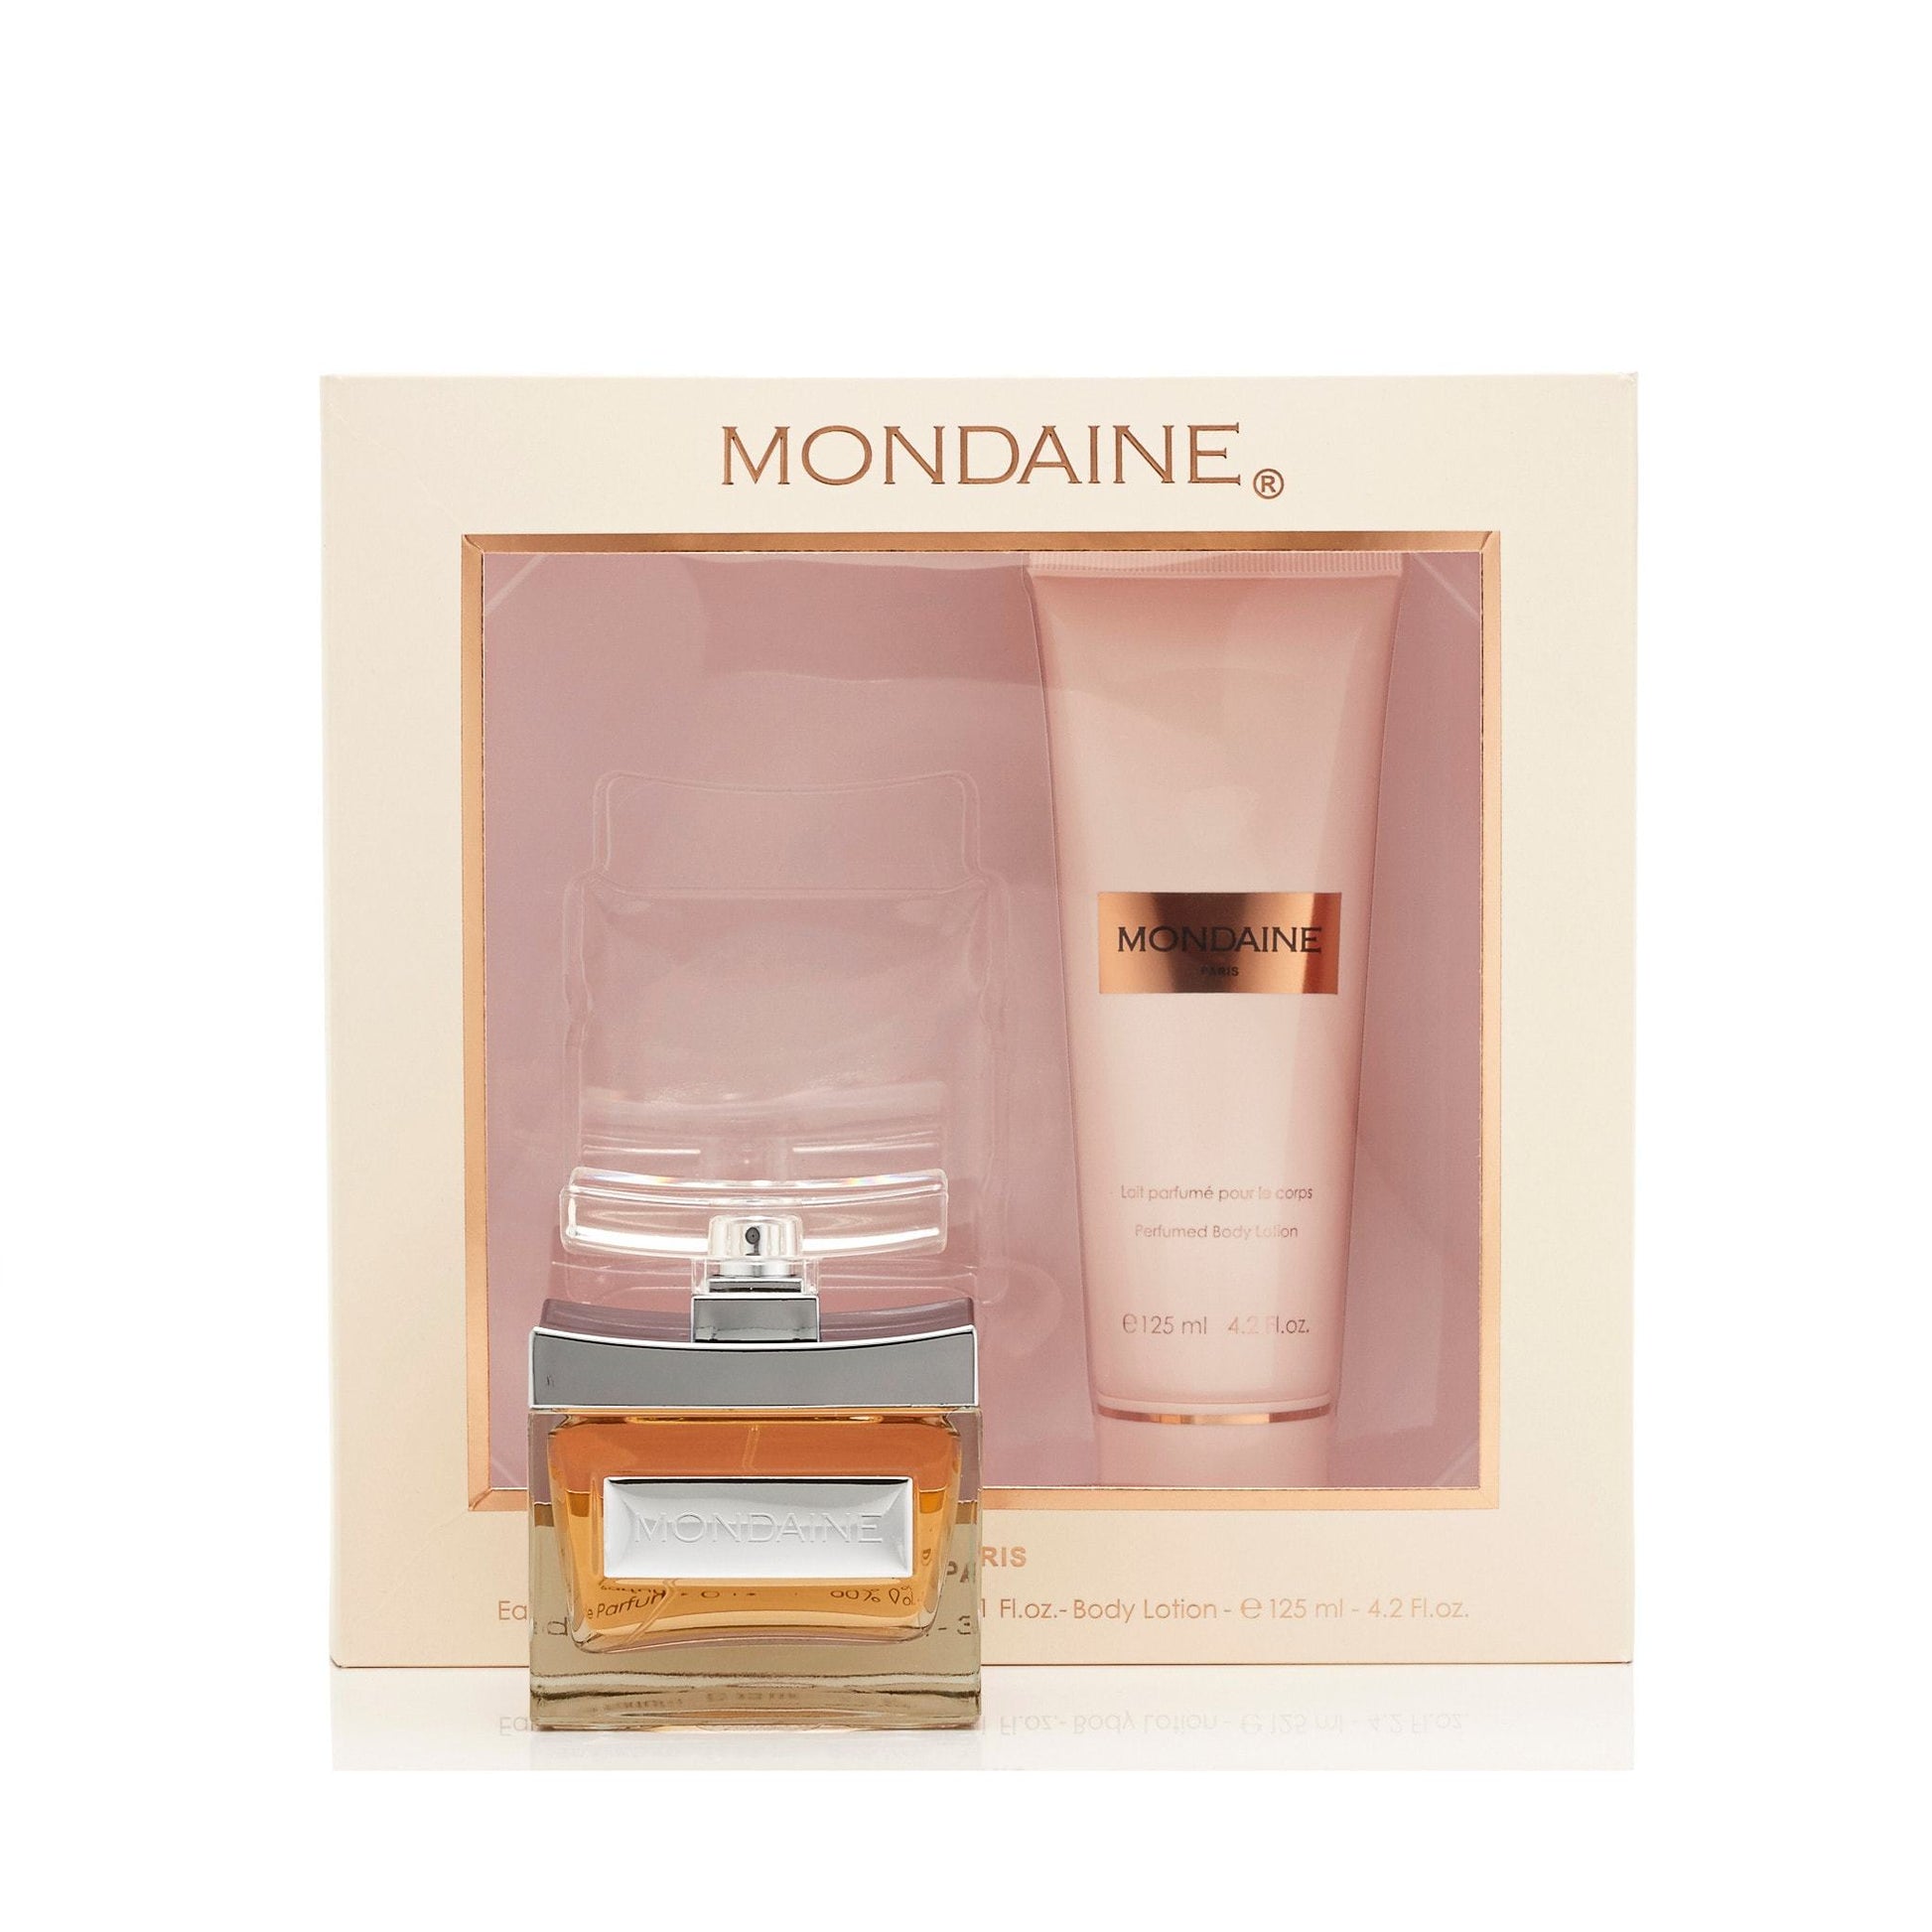 2 ) Mondaine Paris Bleu Eau de Parfum Spray 3.1 oz